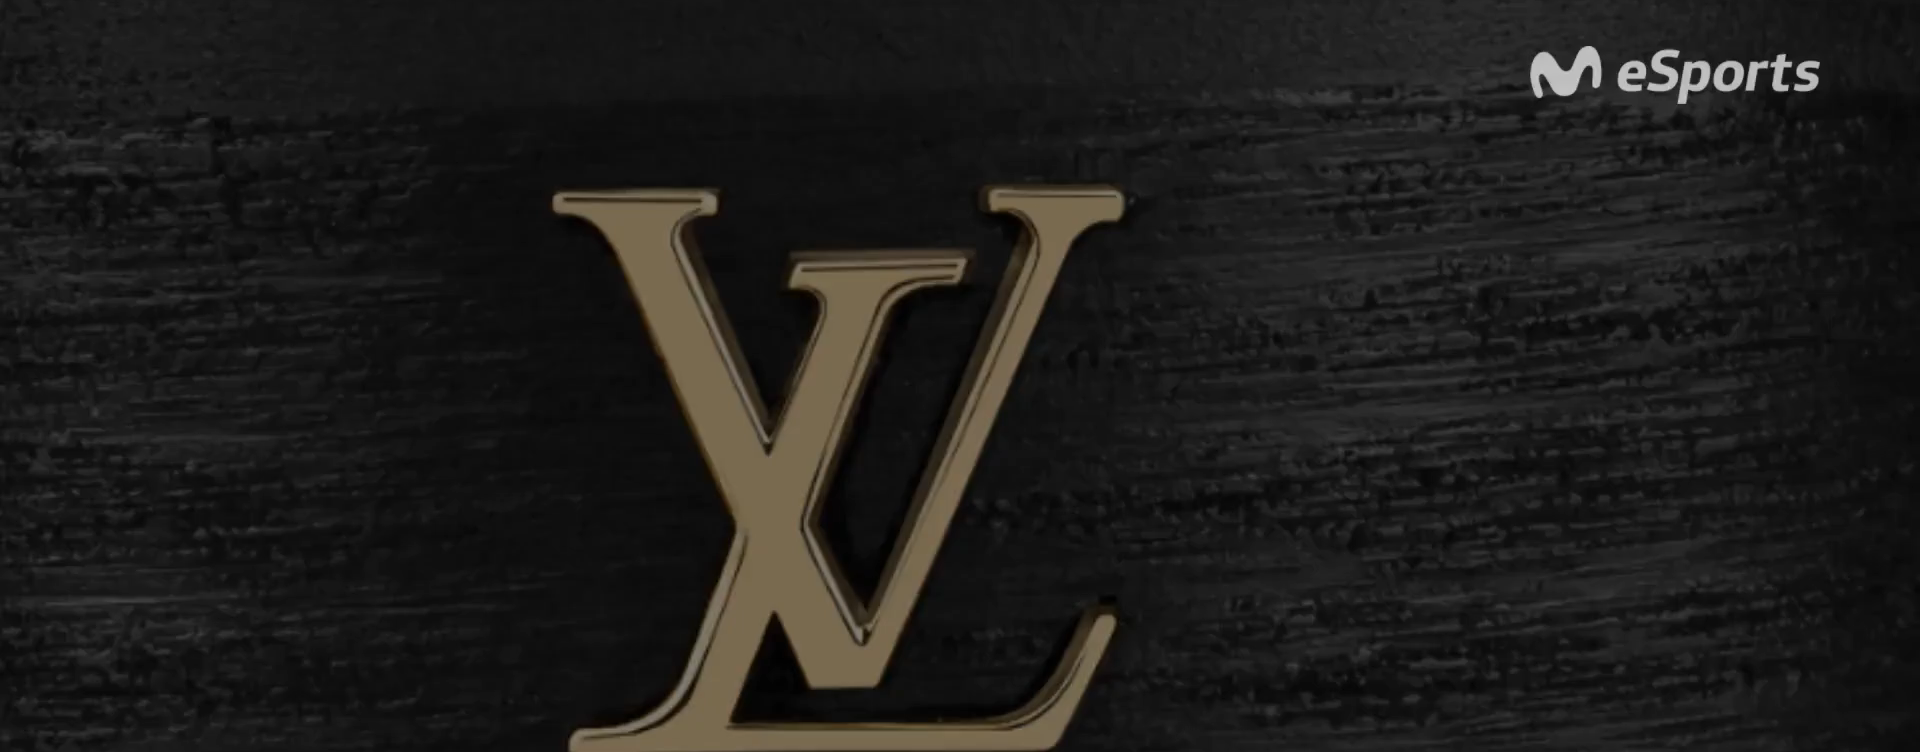 Louis Vuitton crea la colección League of Legends